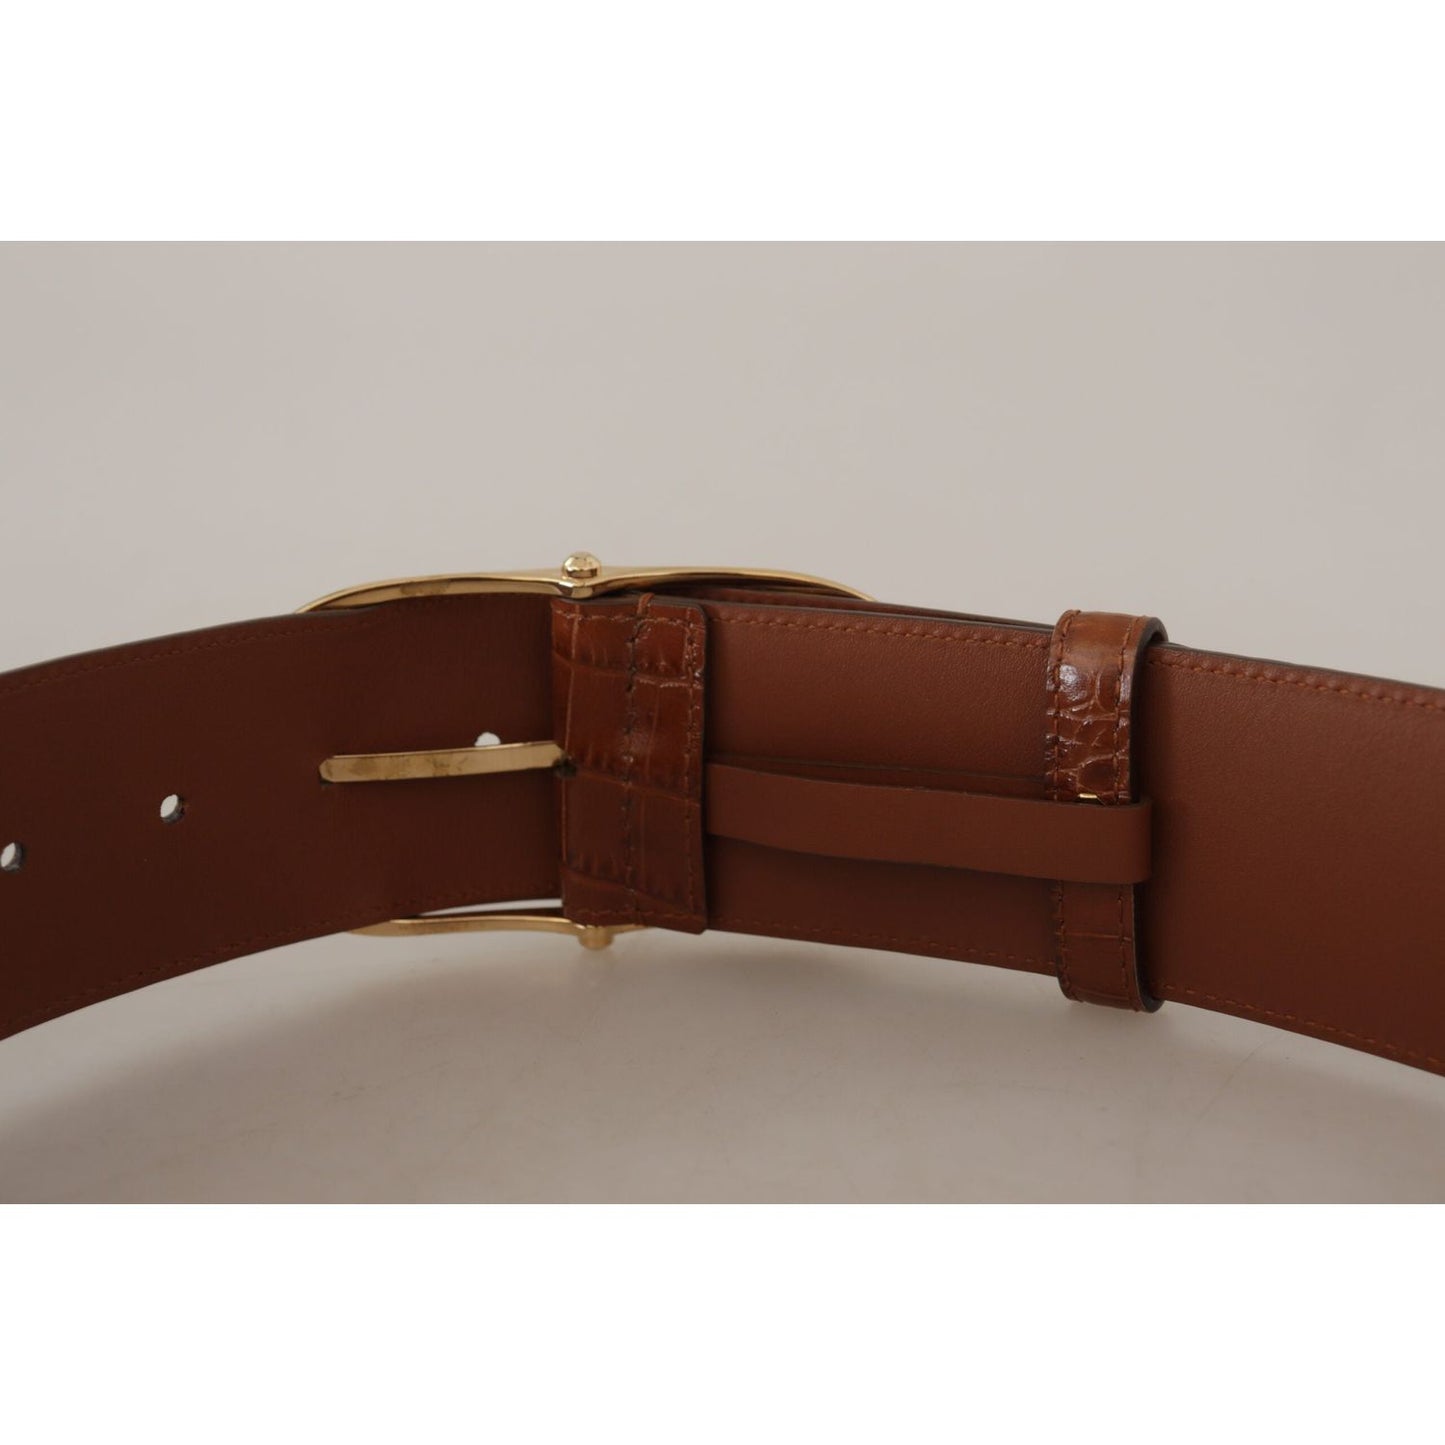 Dolce & Gabbana Enchanting Engraved Logo Leather Belt brown-wide-waist-leather-gold-oval-metal-buckle-belt IMG_9078-scaled-302247ae-d29.jpg